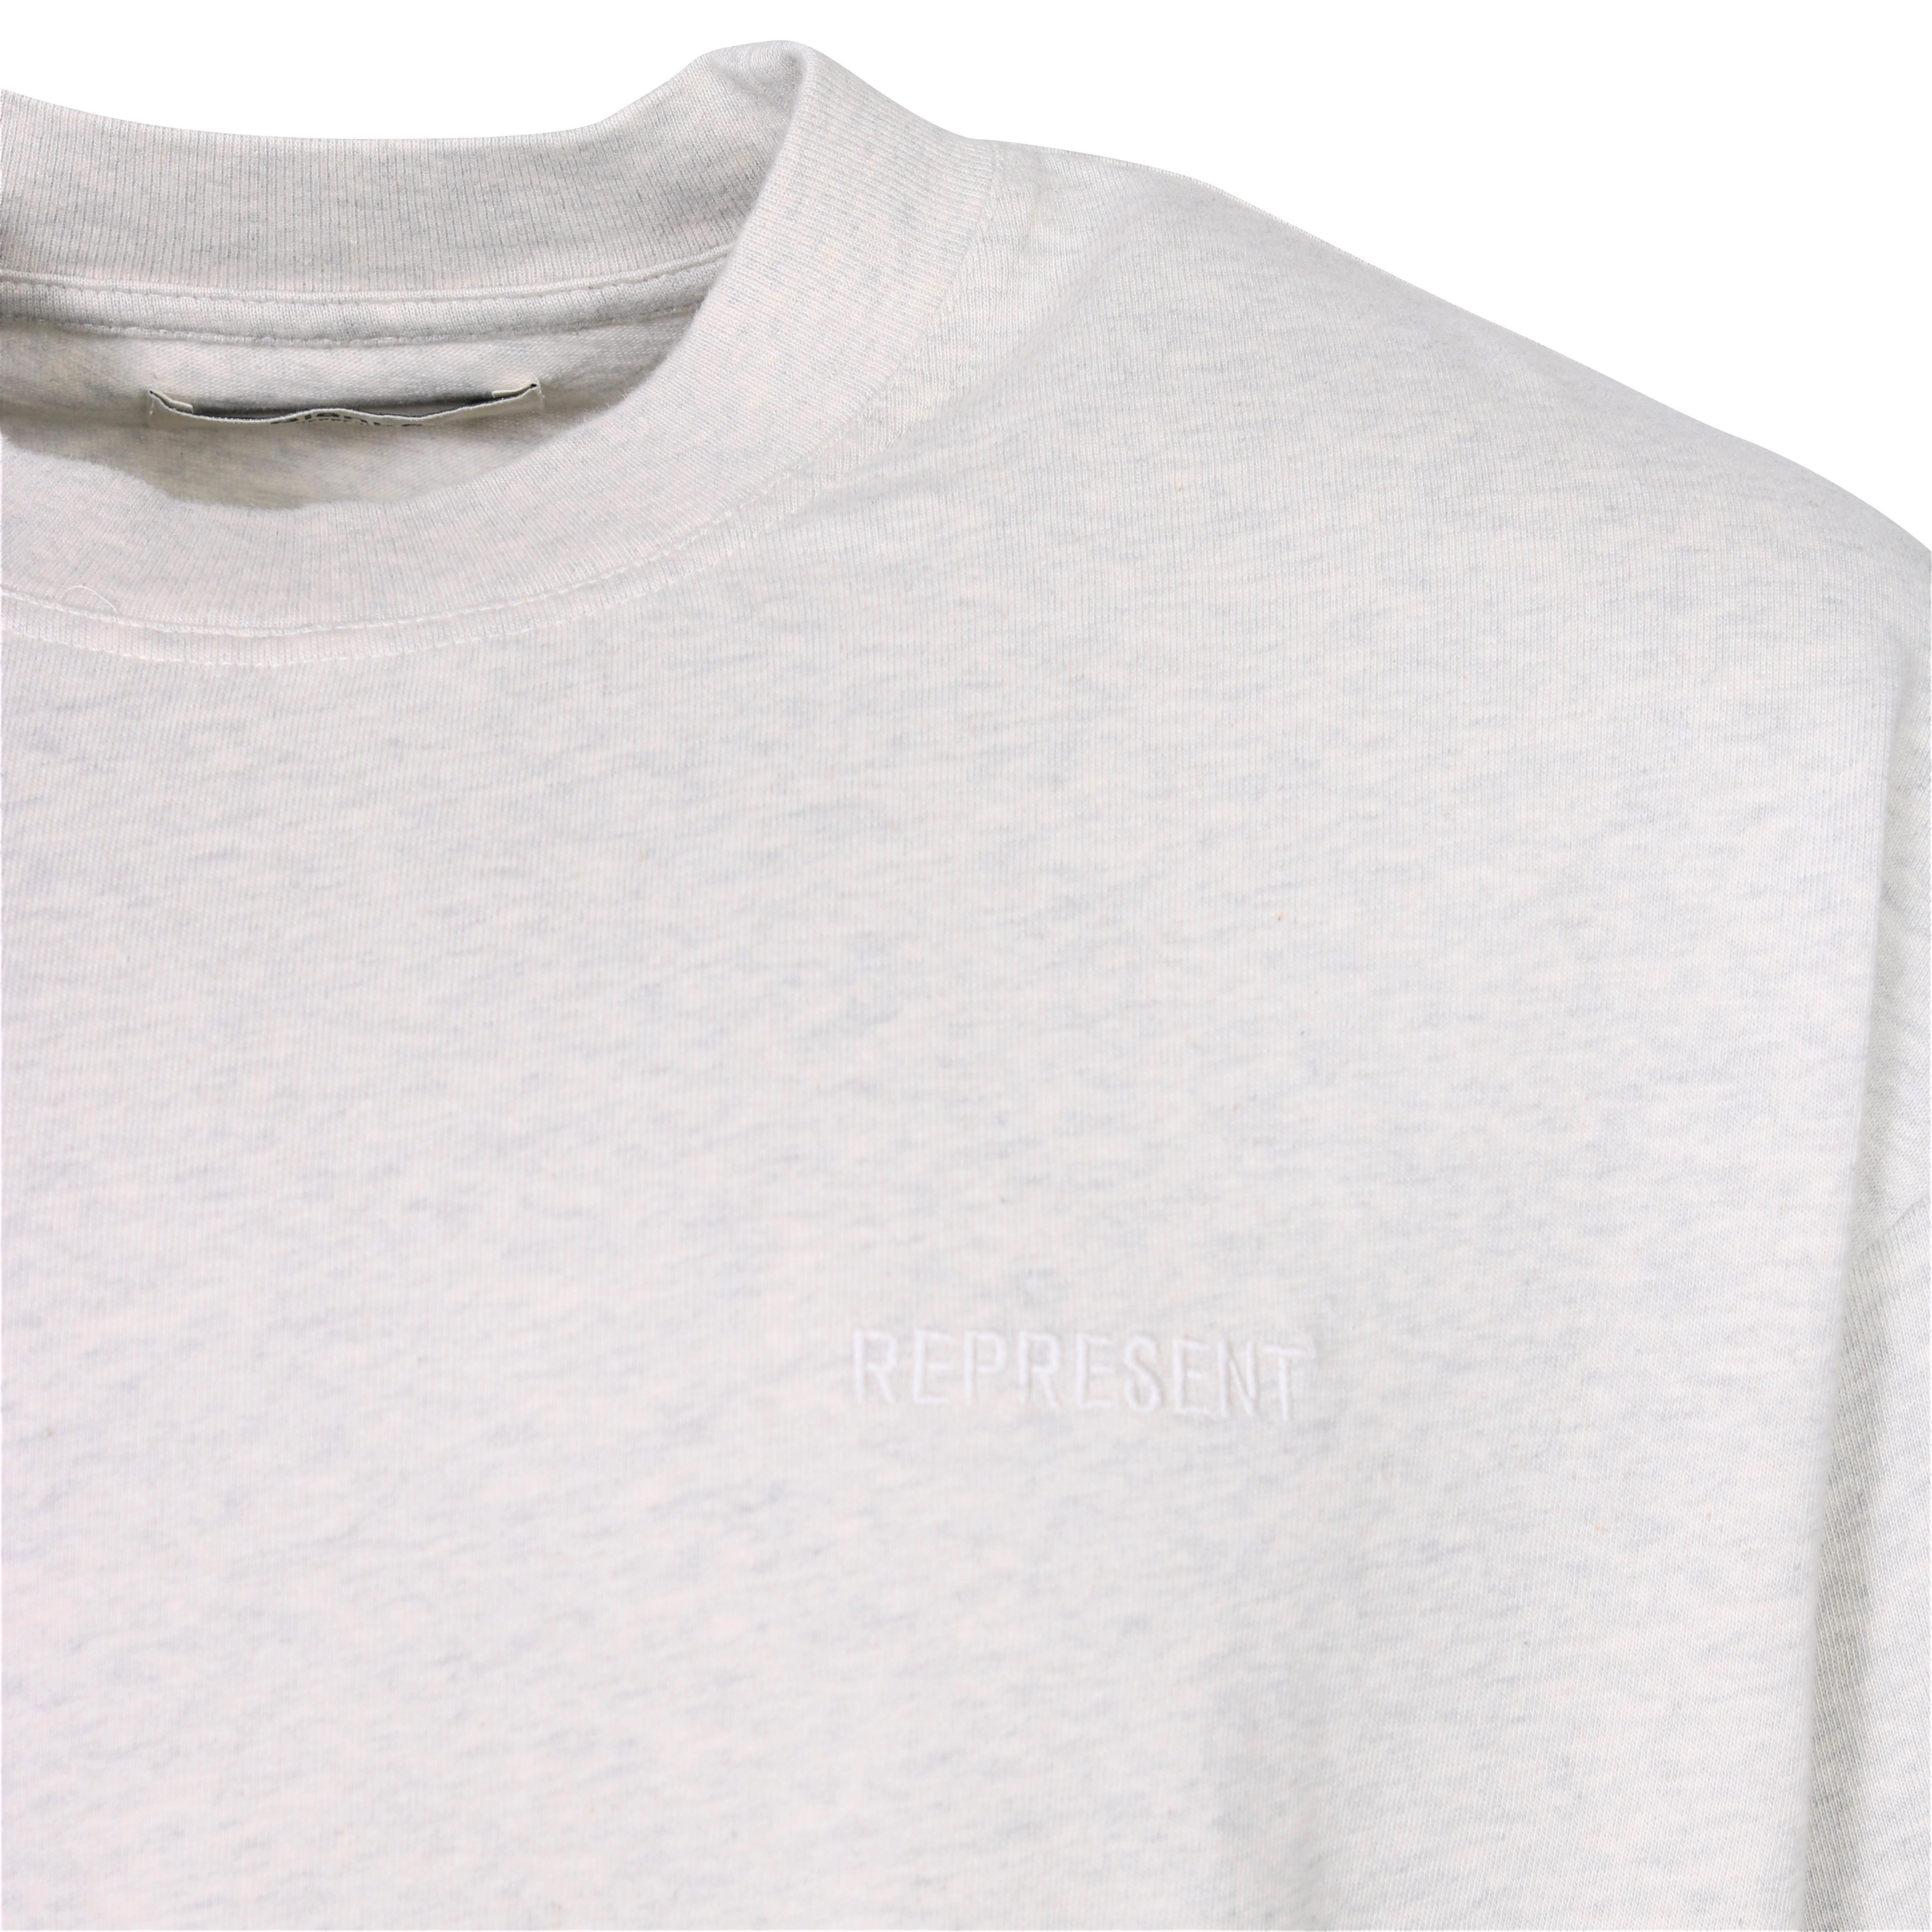 Represent Blank T-Shirt in Cream Marl